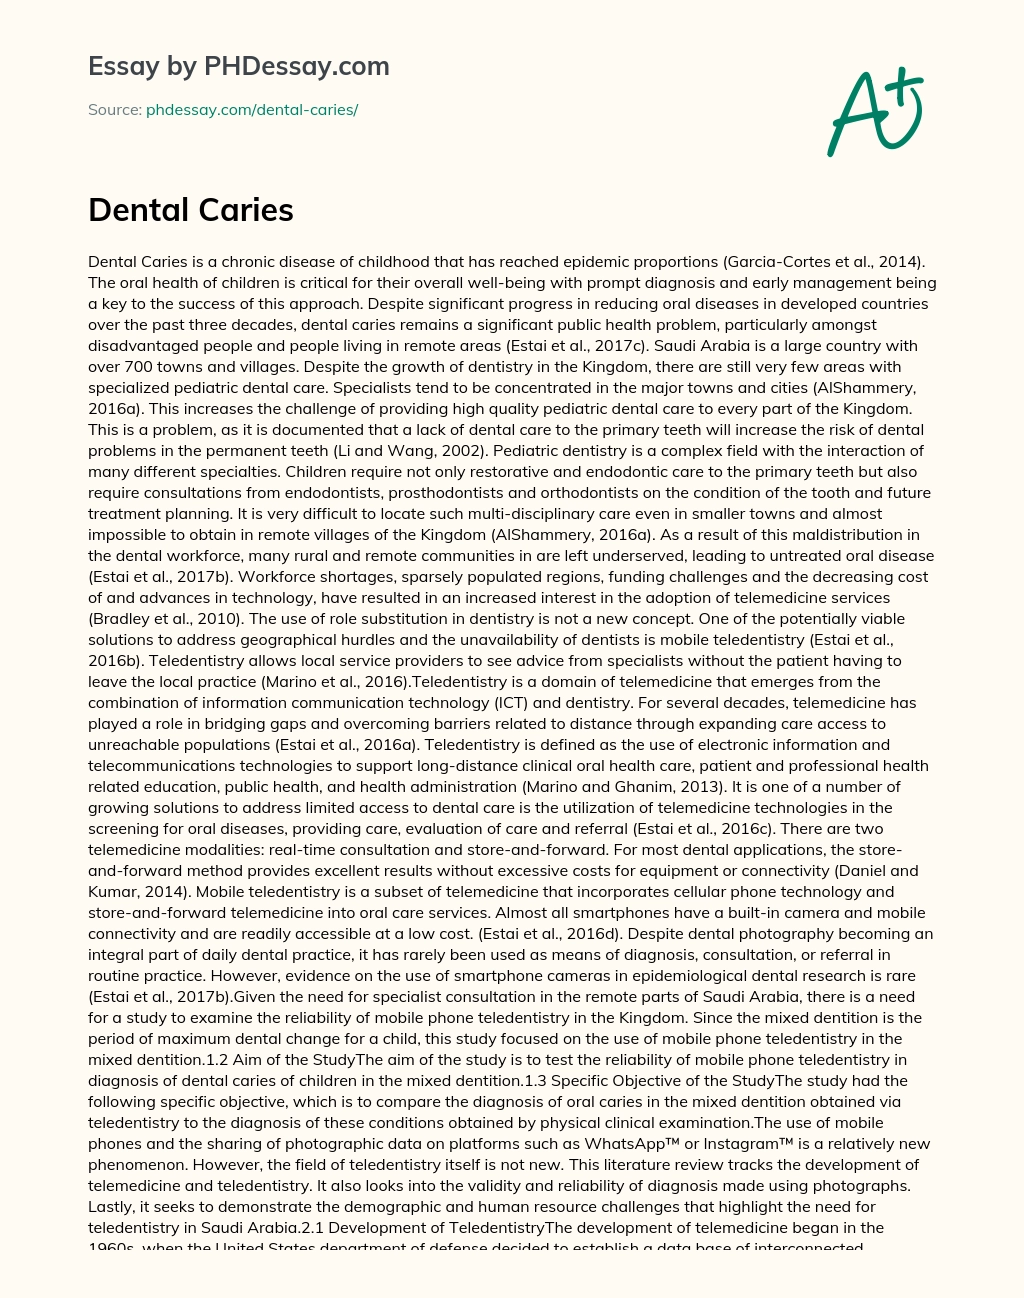 Dental Caries essay